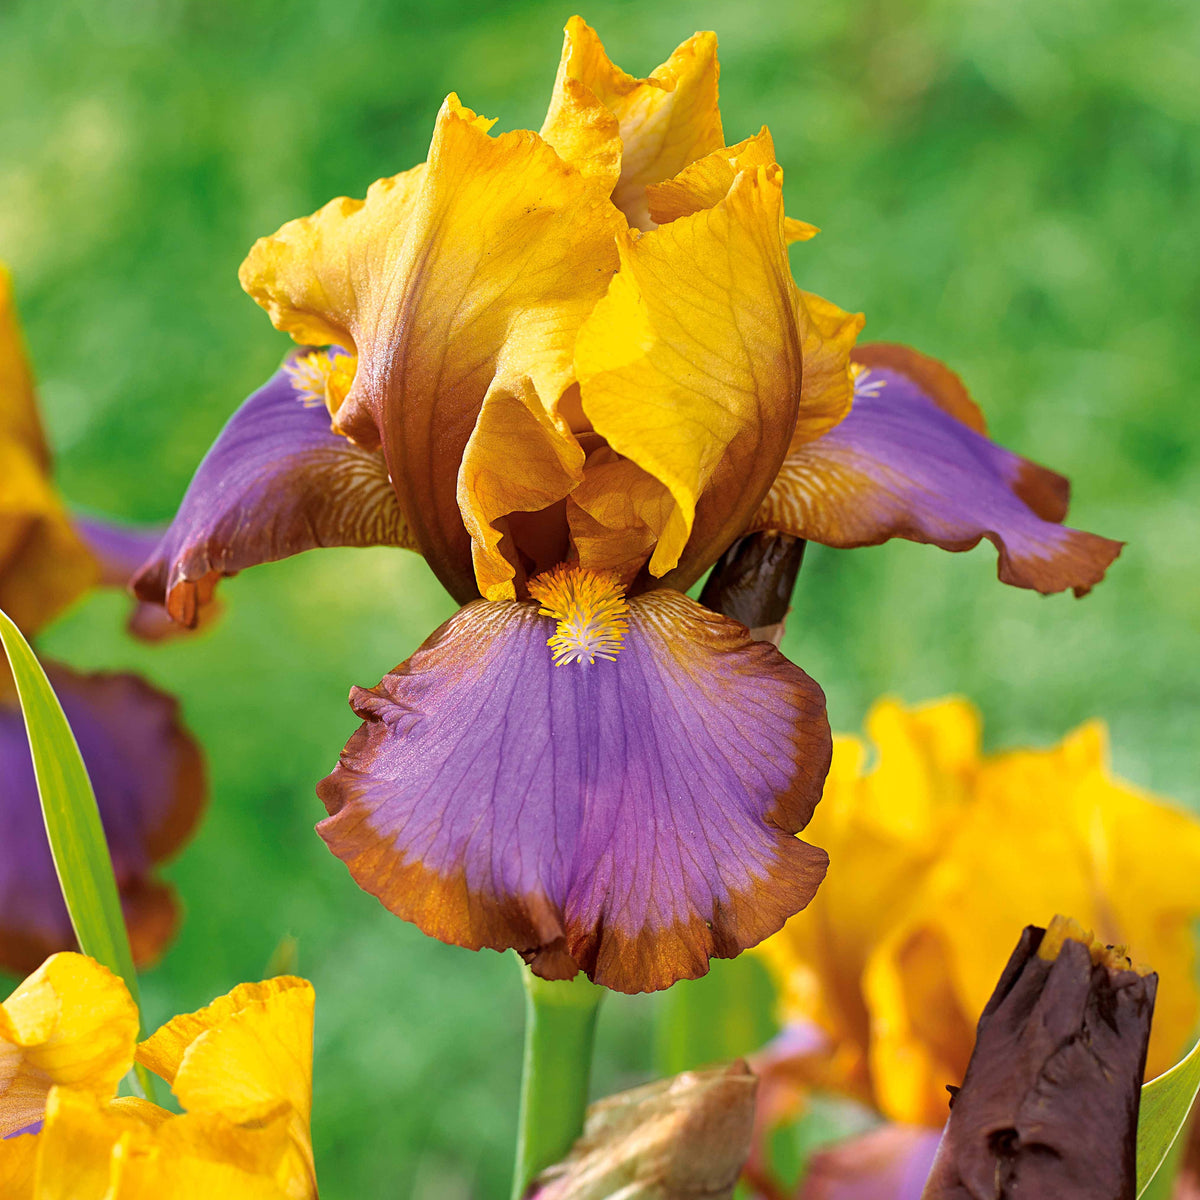 Collection de 6 Iris de jardin : Lasso, Bordure, Sangreal - Iris germanica  (2 lasso, 2 bordure, 2 sangreal) - Plantes vivaces